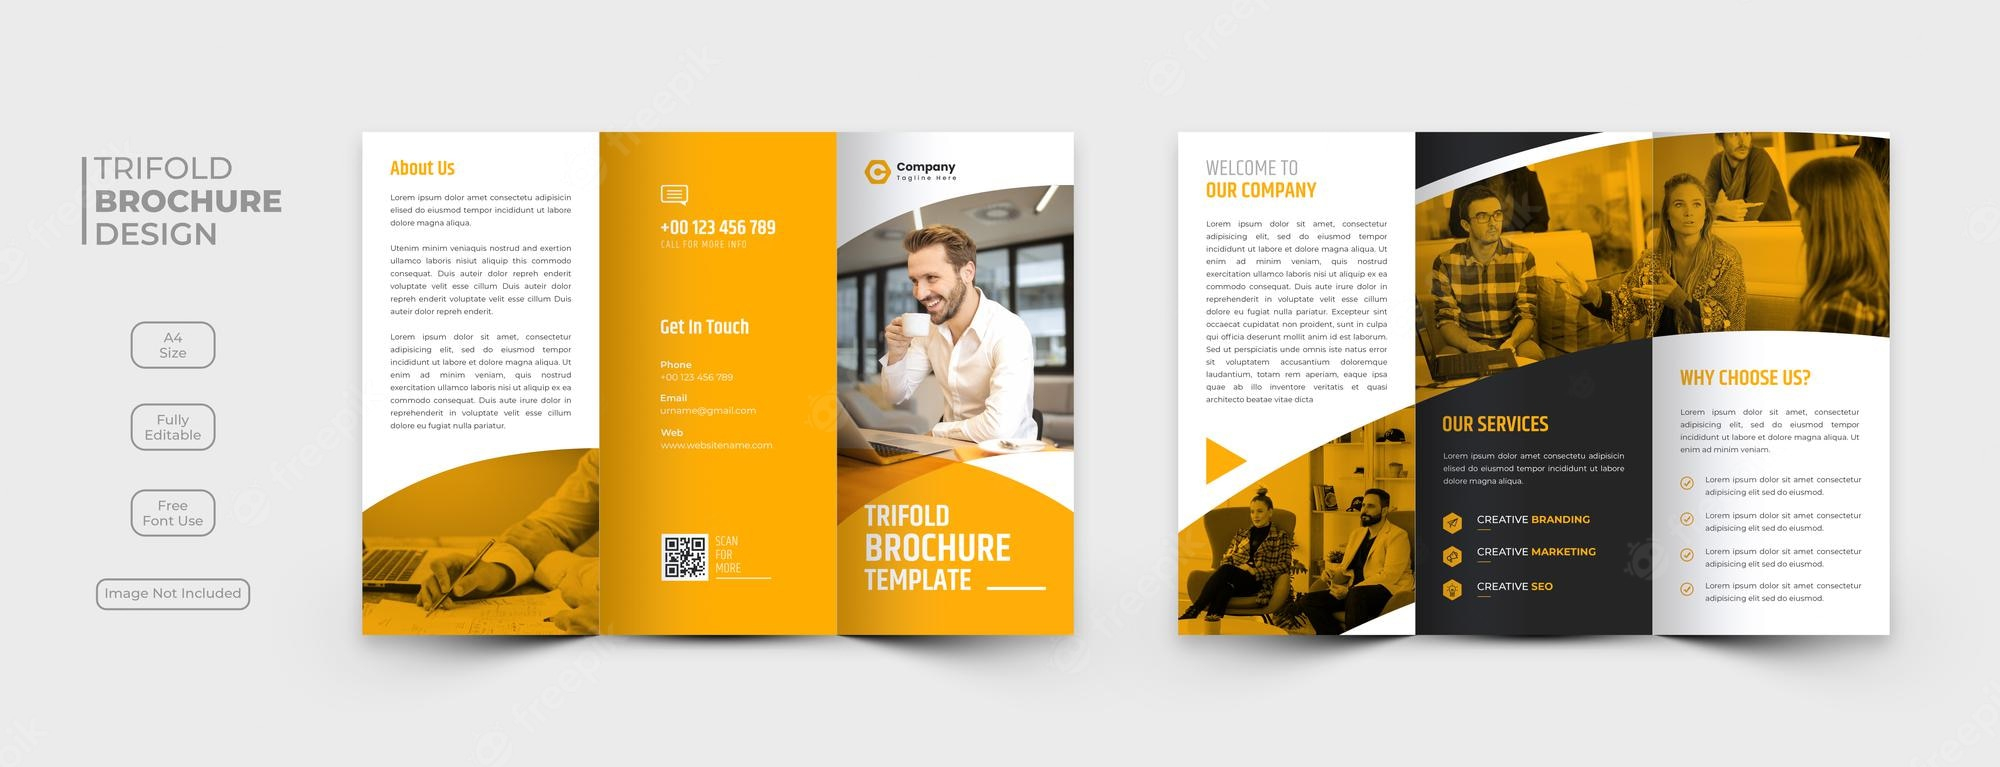 Brochure template - Free Vectors & PSD Download Throughout Online Free Brochure Design Templates